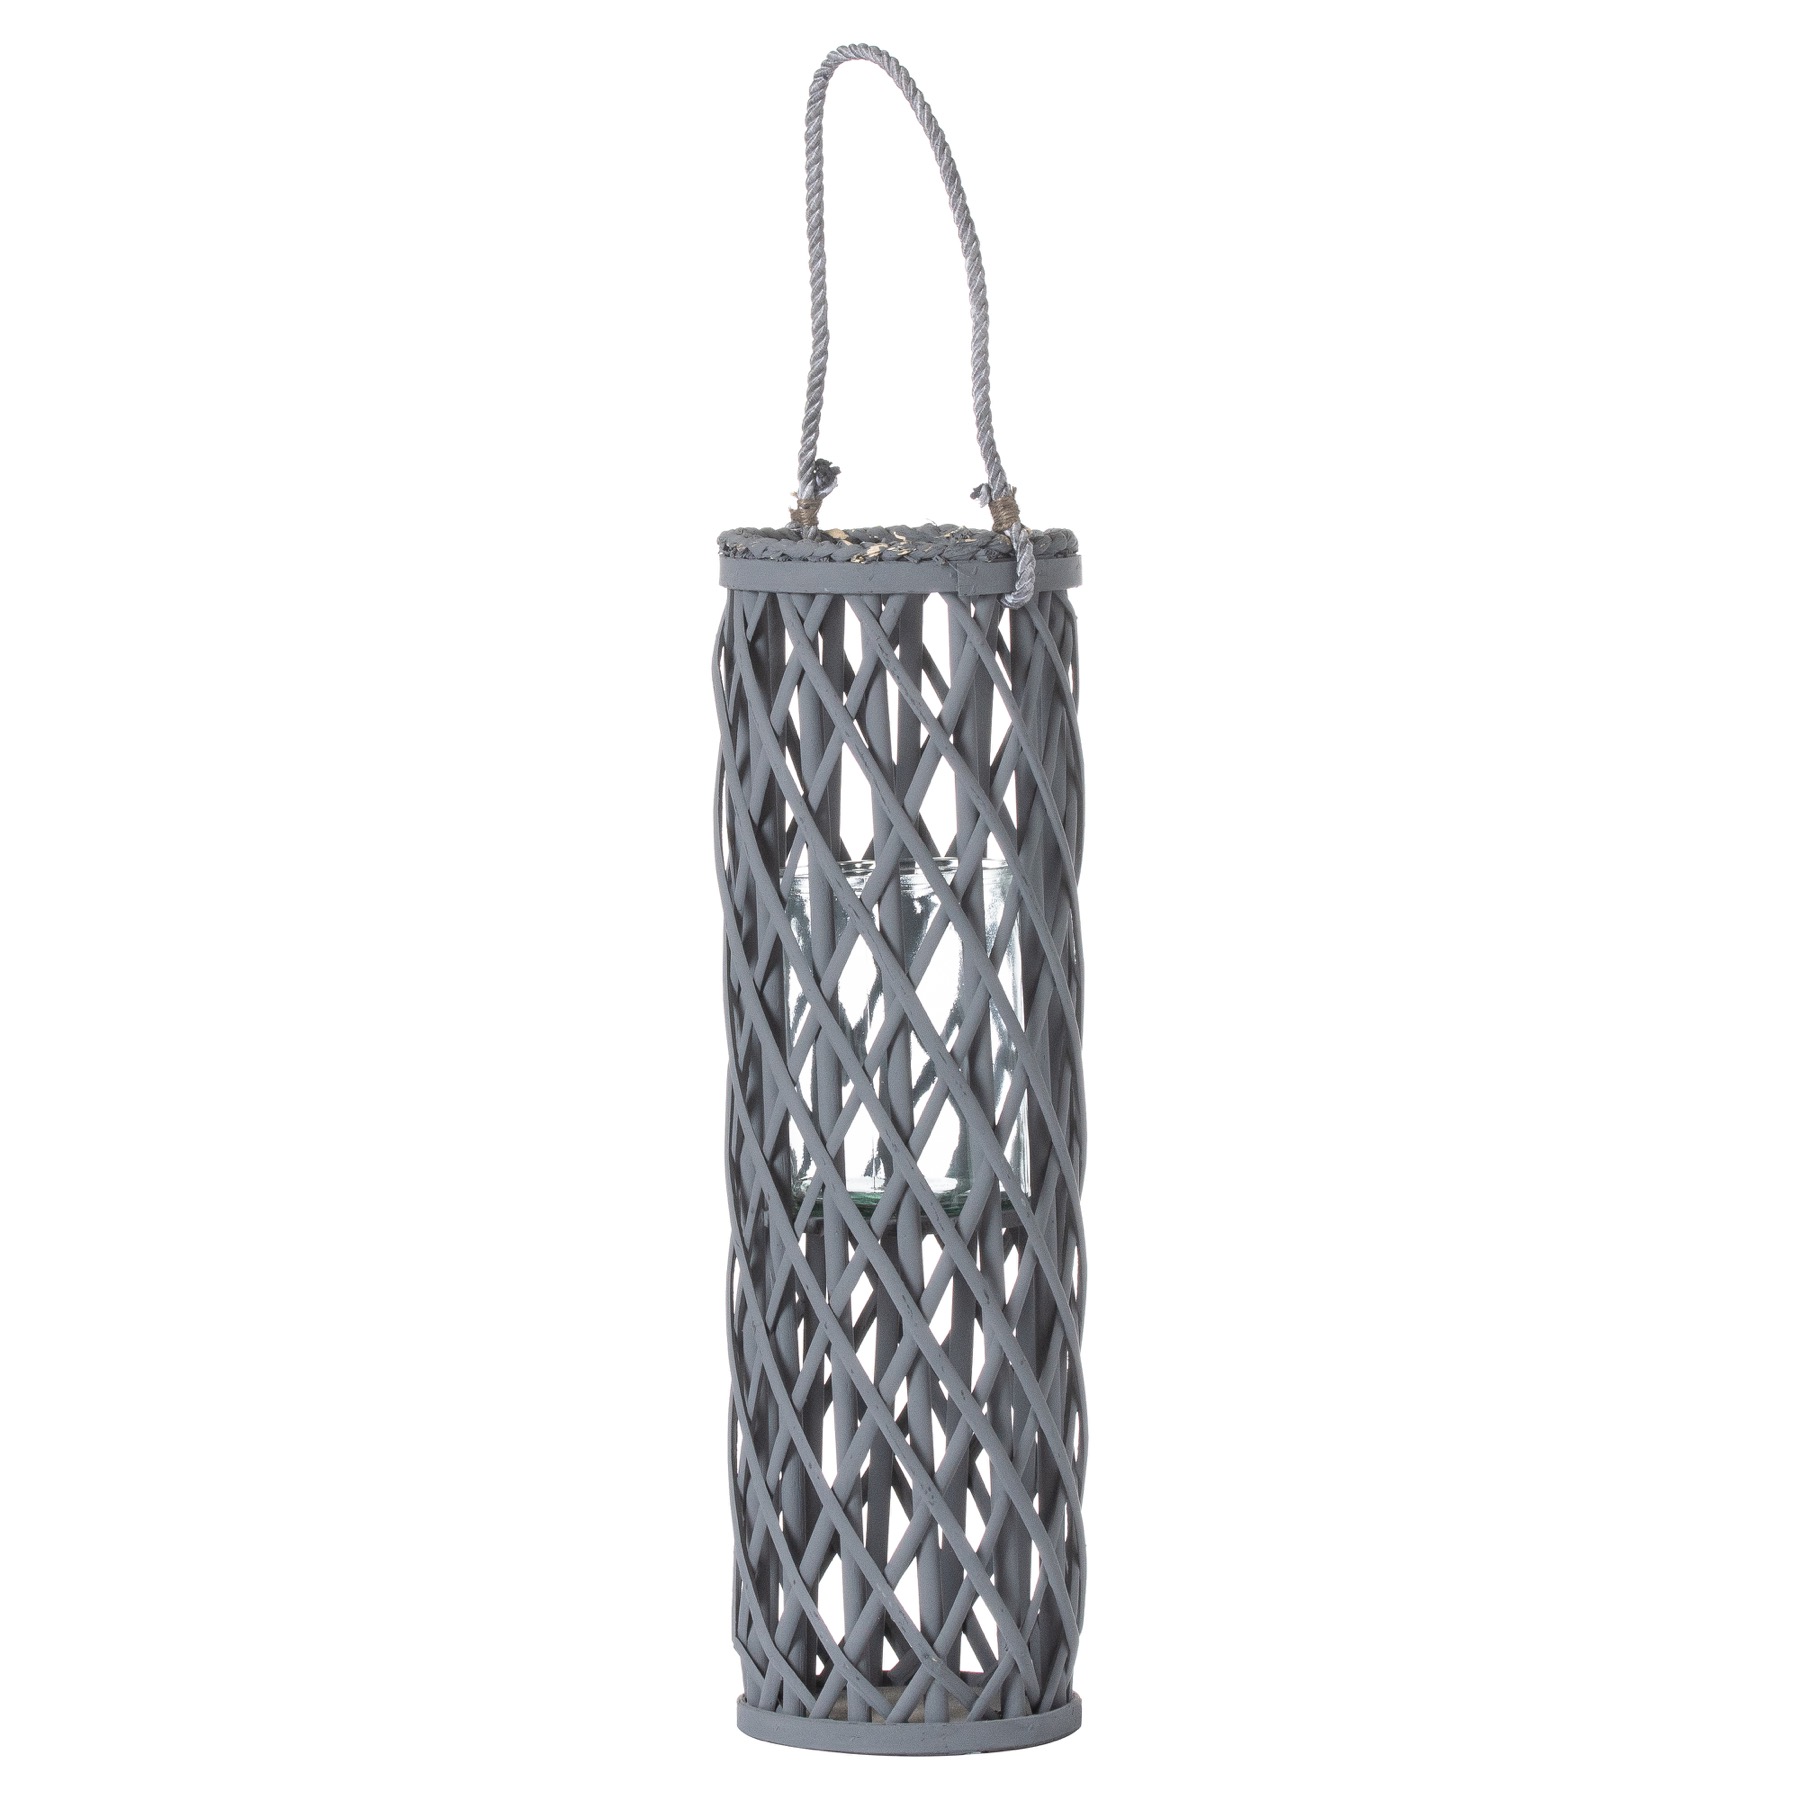 Medium Grey Wicker Lantern With Glass Hurricane - Image 1